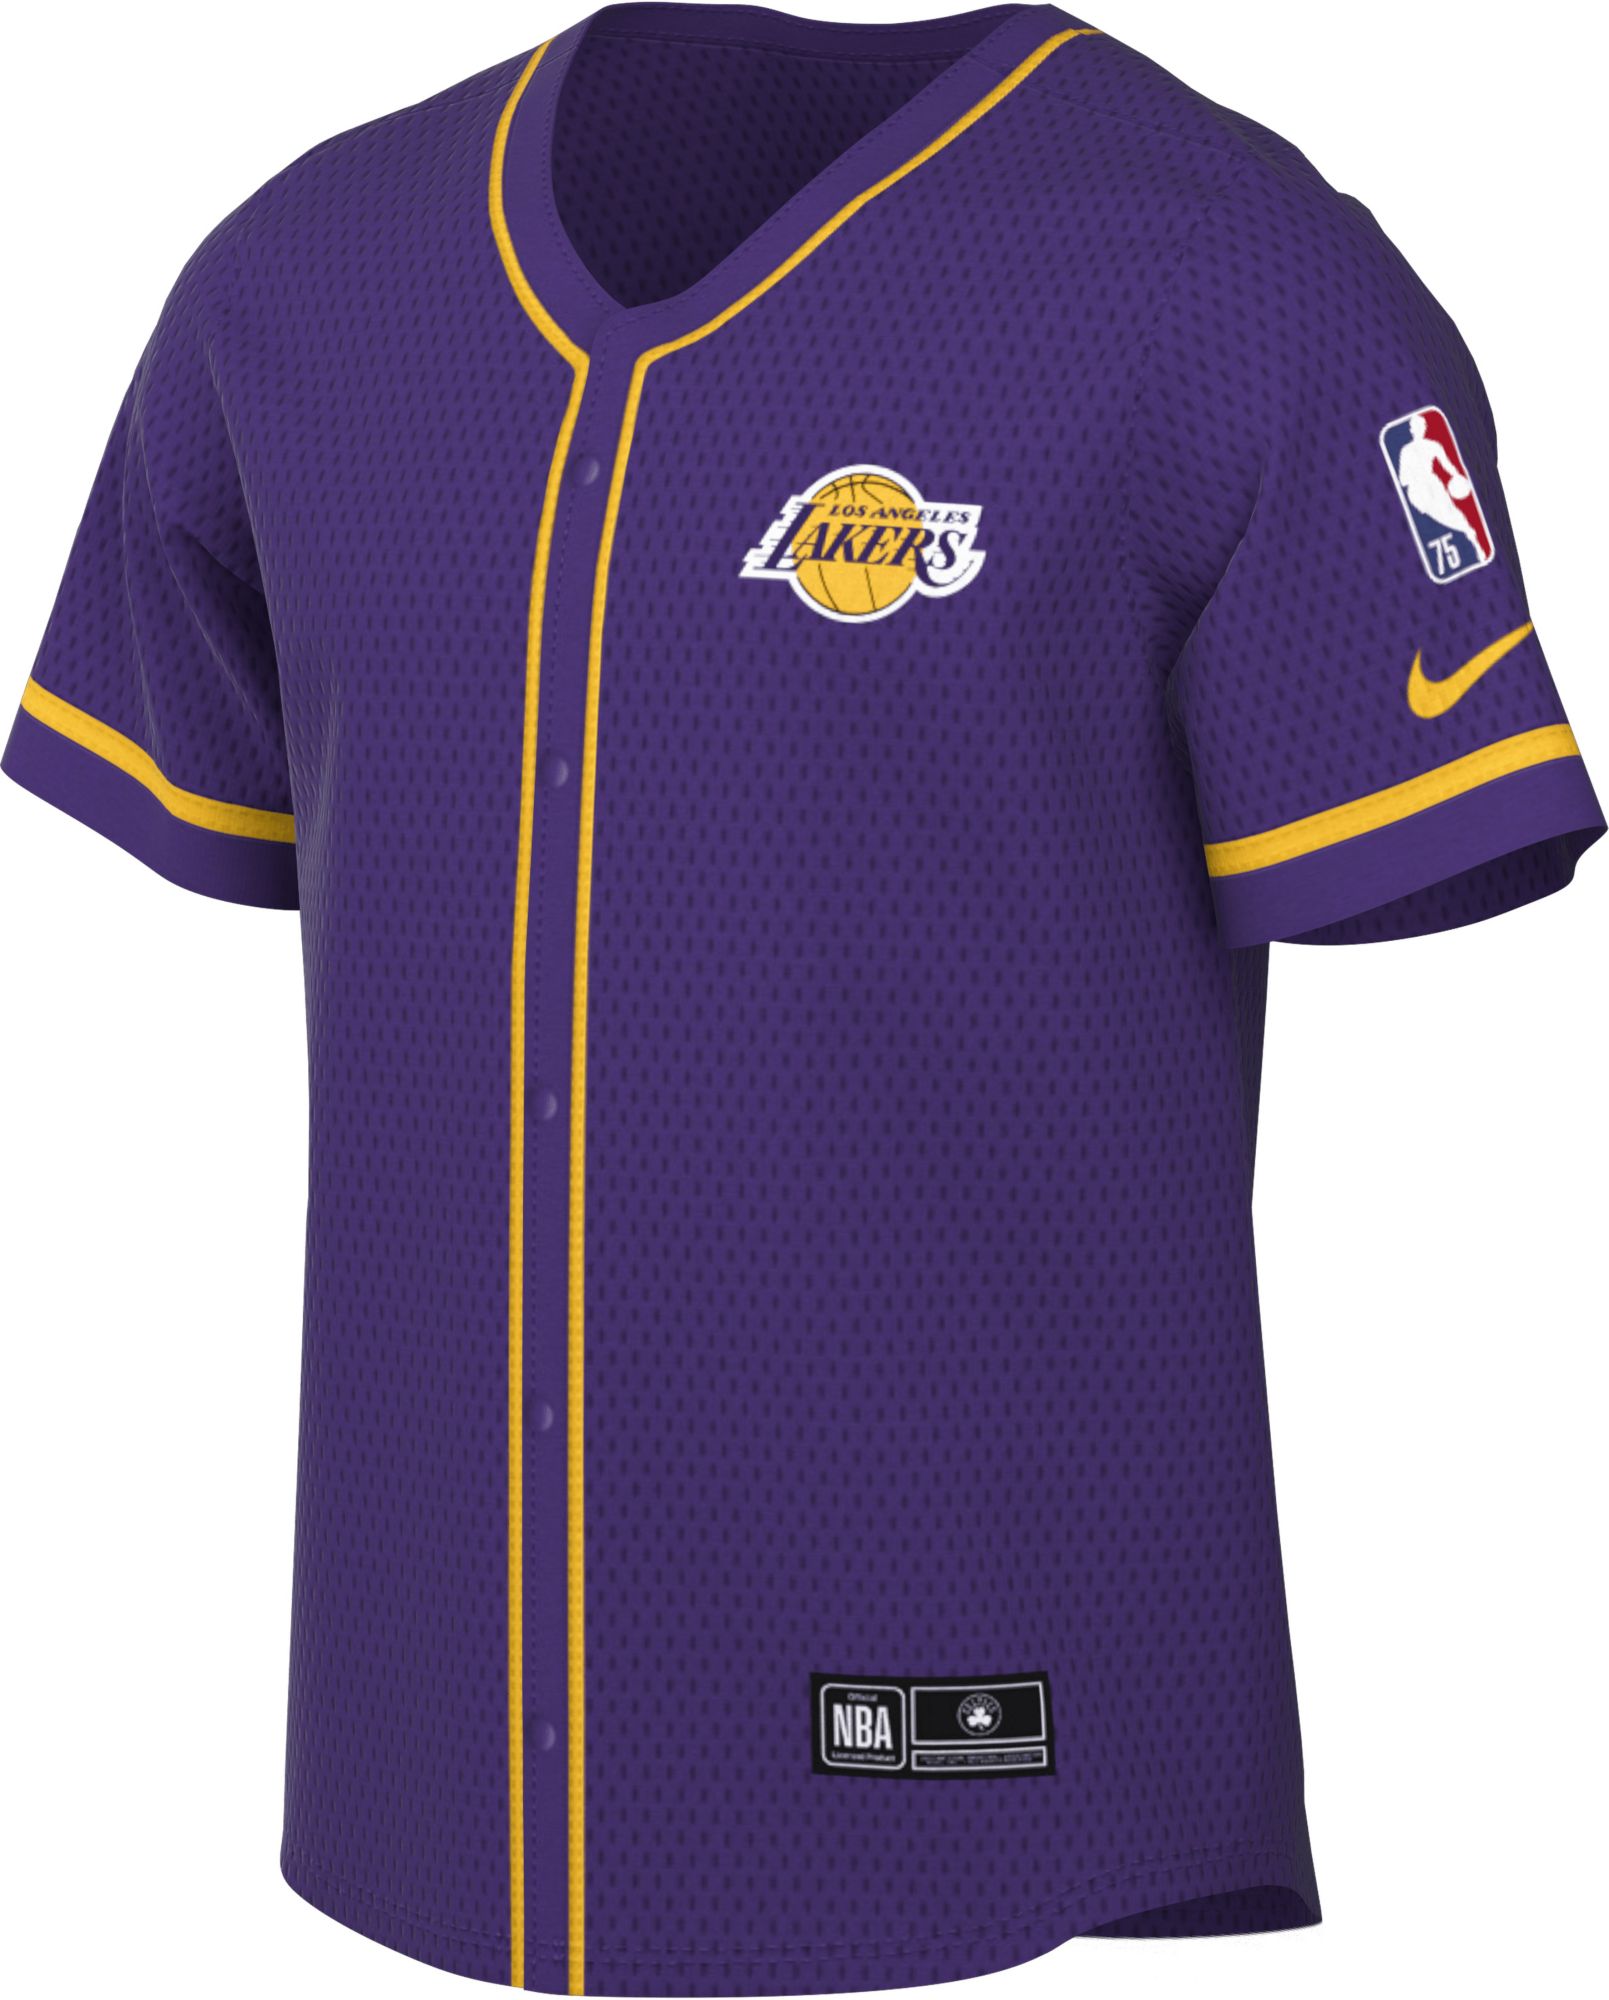 Nike / Men's Los Angeles Lakers Purple Jersey Top